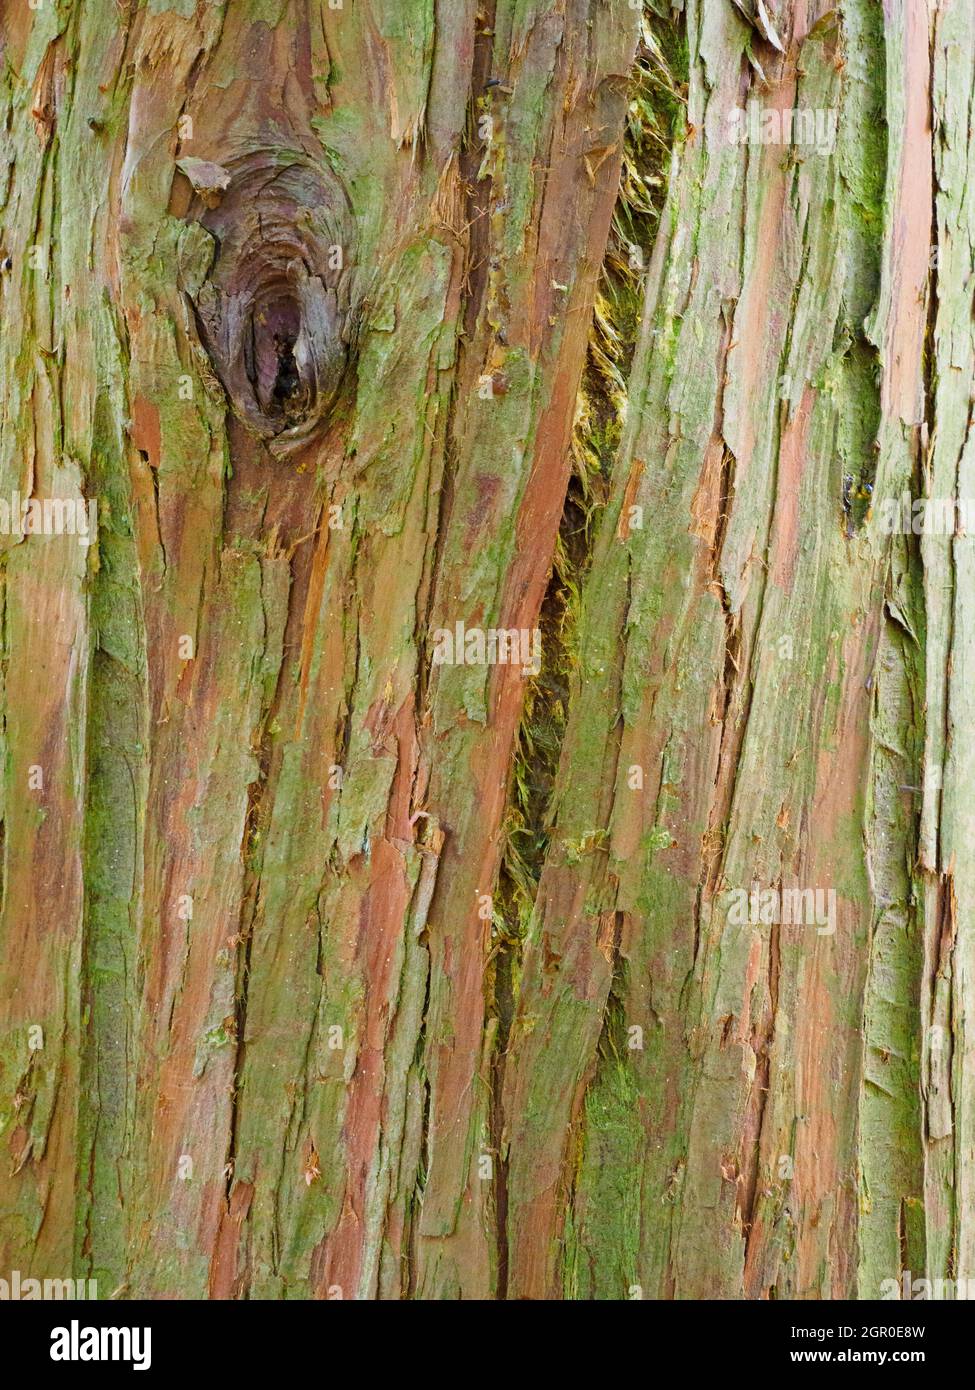 Chamaecyparis nootkatensis, Nootka cypress tree Stock Photo